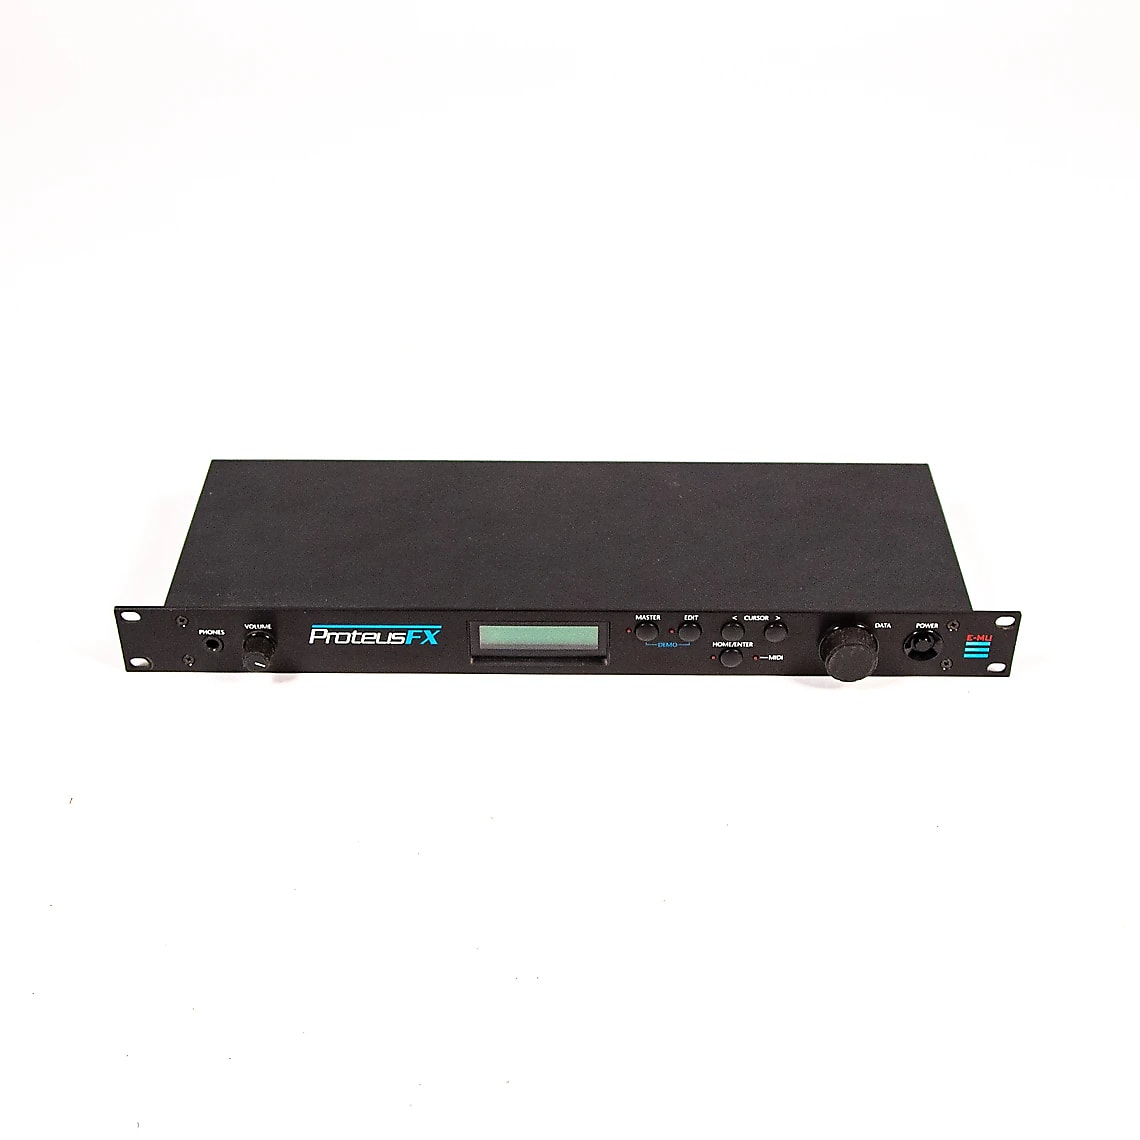 E-MU Systems Proteus FX Rackmount 32-Voice Sampler Module | Reverb